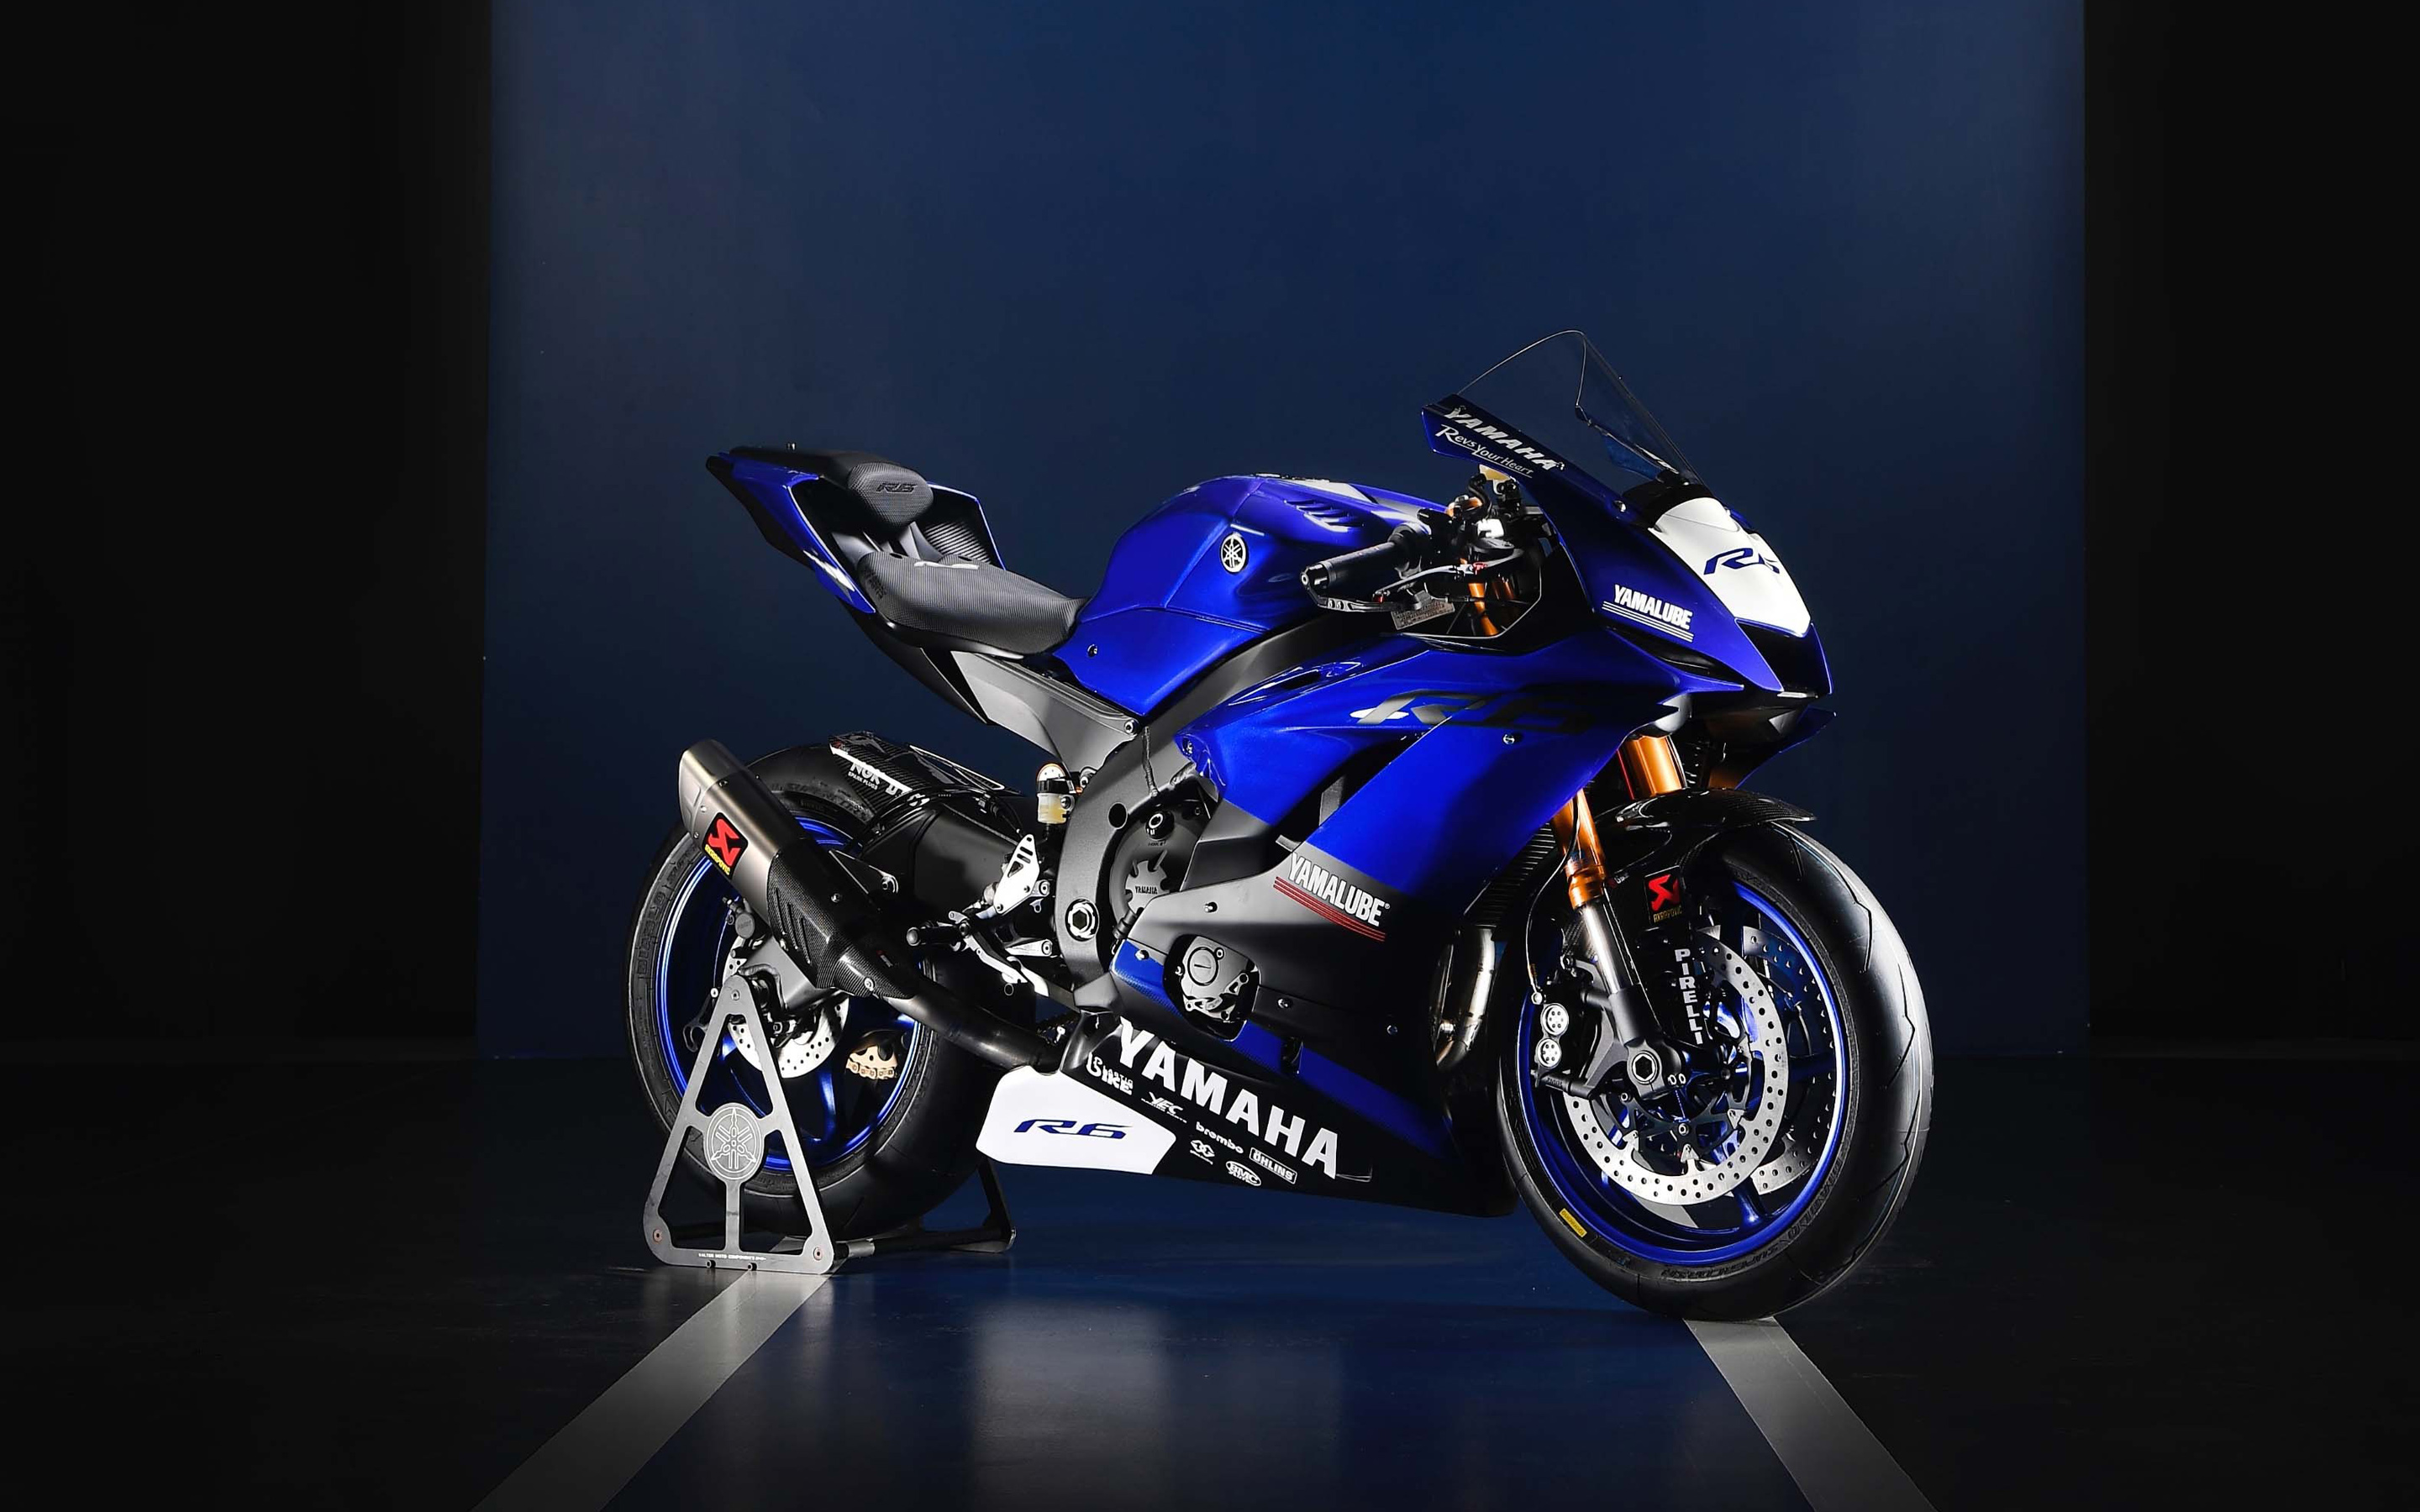 yamaha r6 fond d'écran hd,véhicule terrestre,moto,véhicule,bleu cobalt,superbike racing